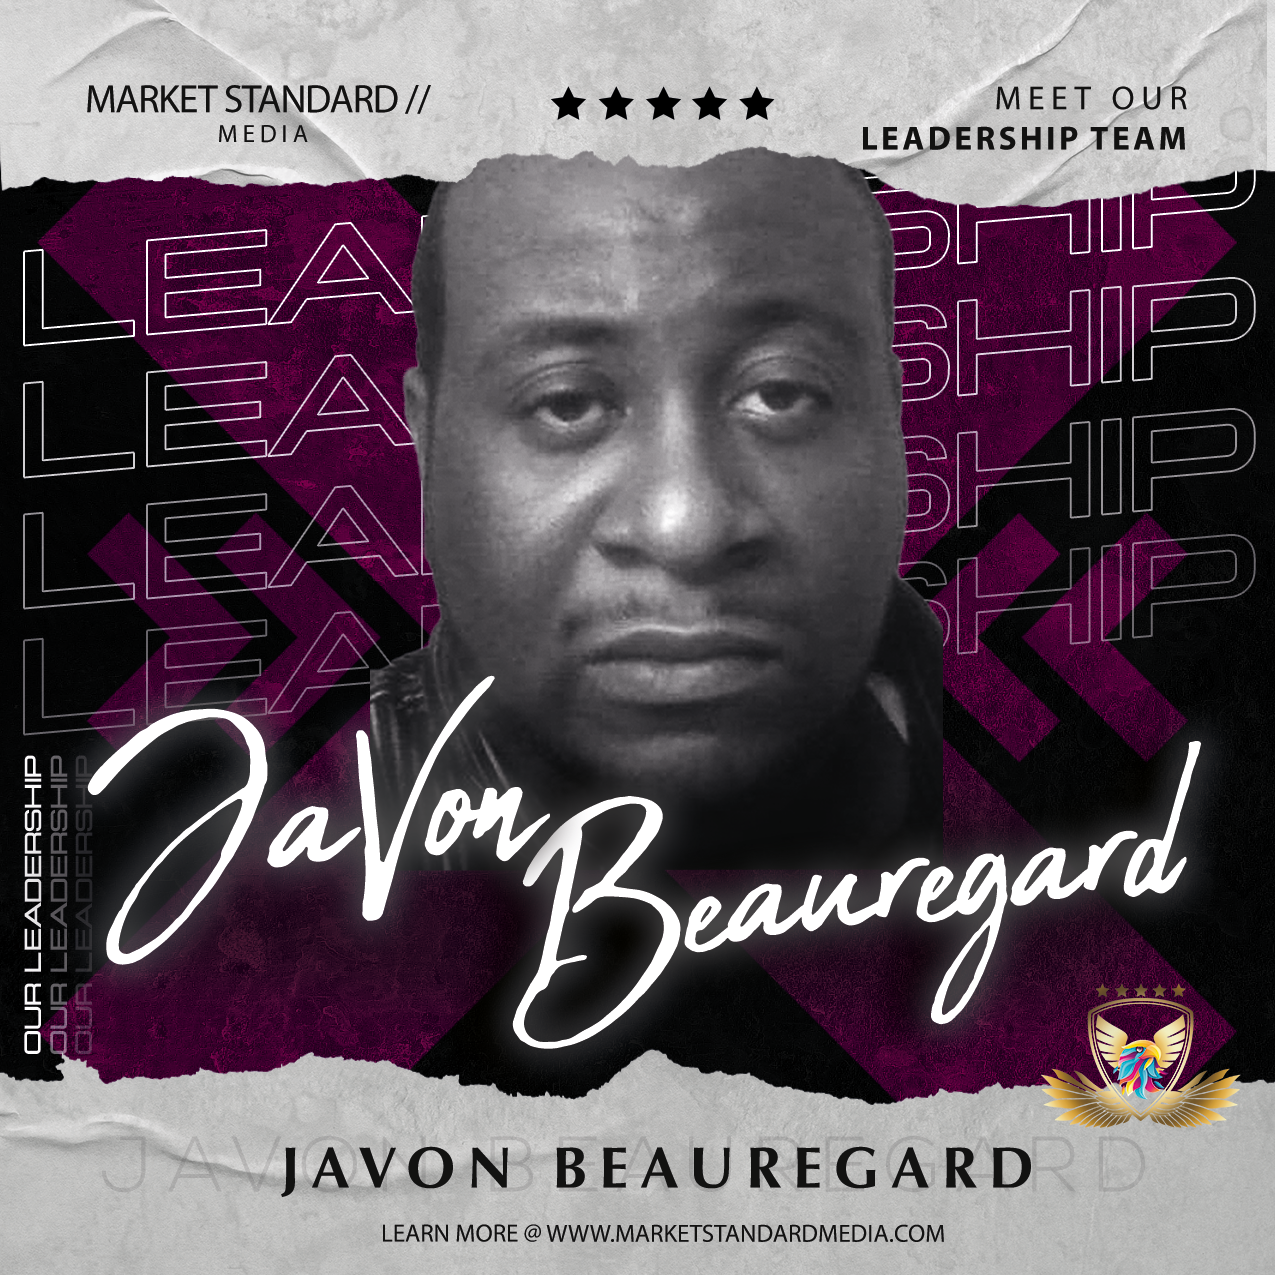 PRESS RELEASE- Meet our Leadership, JaVon E. Beauregard